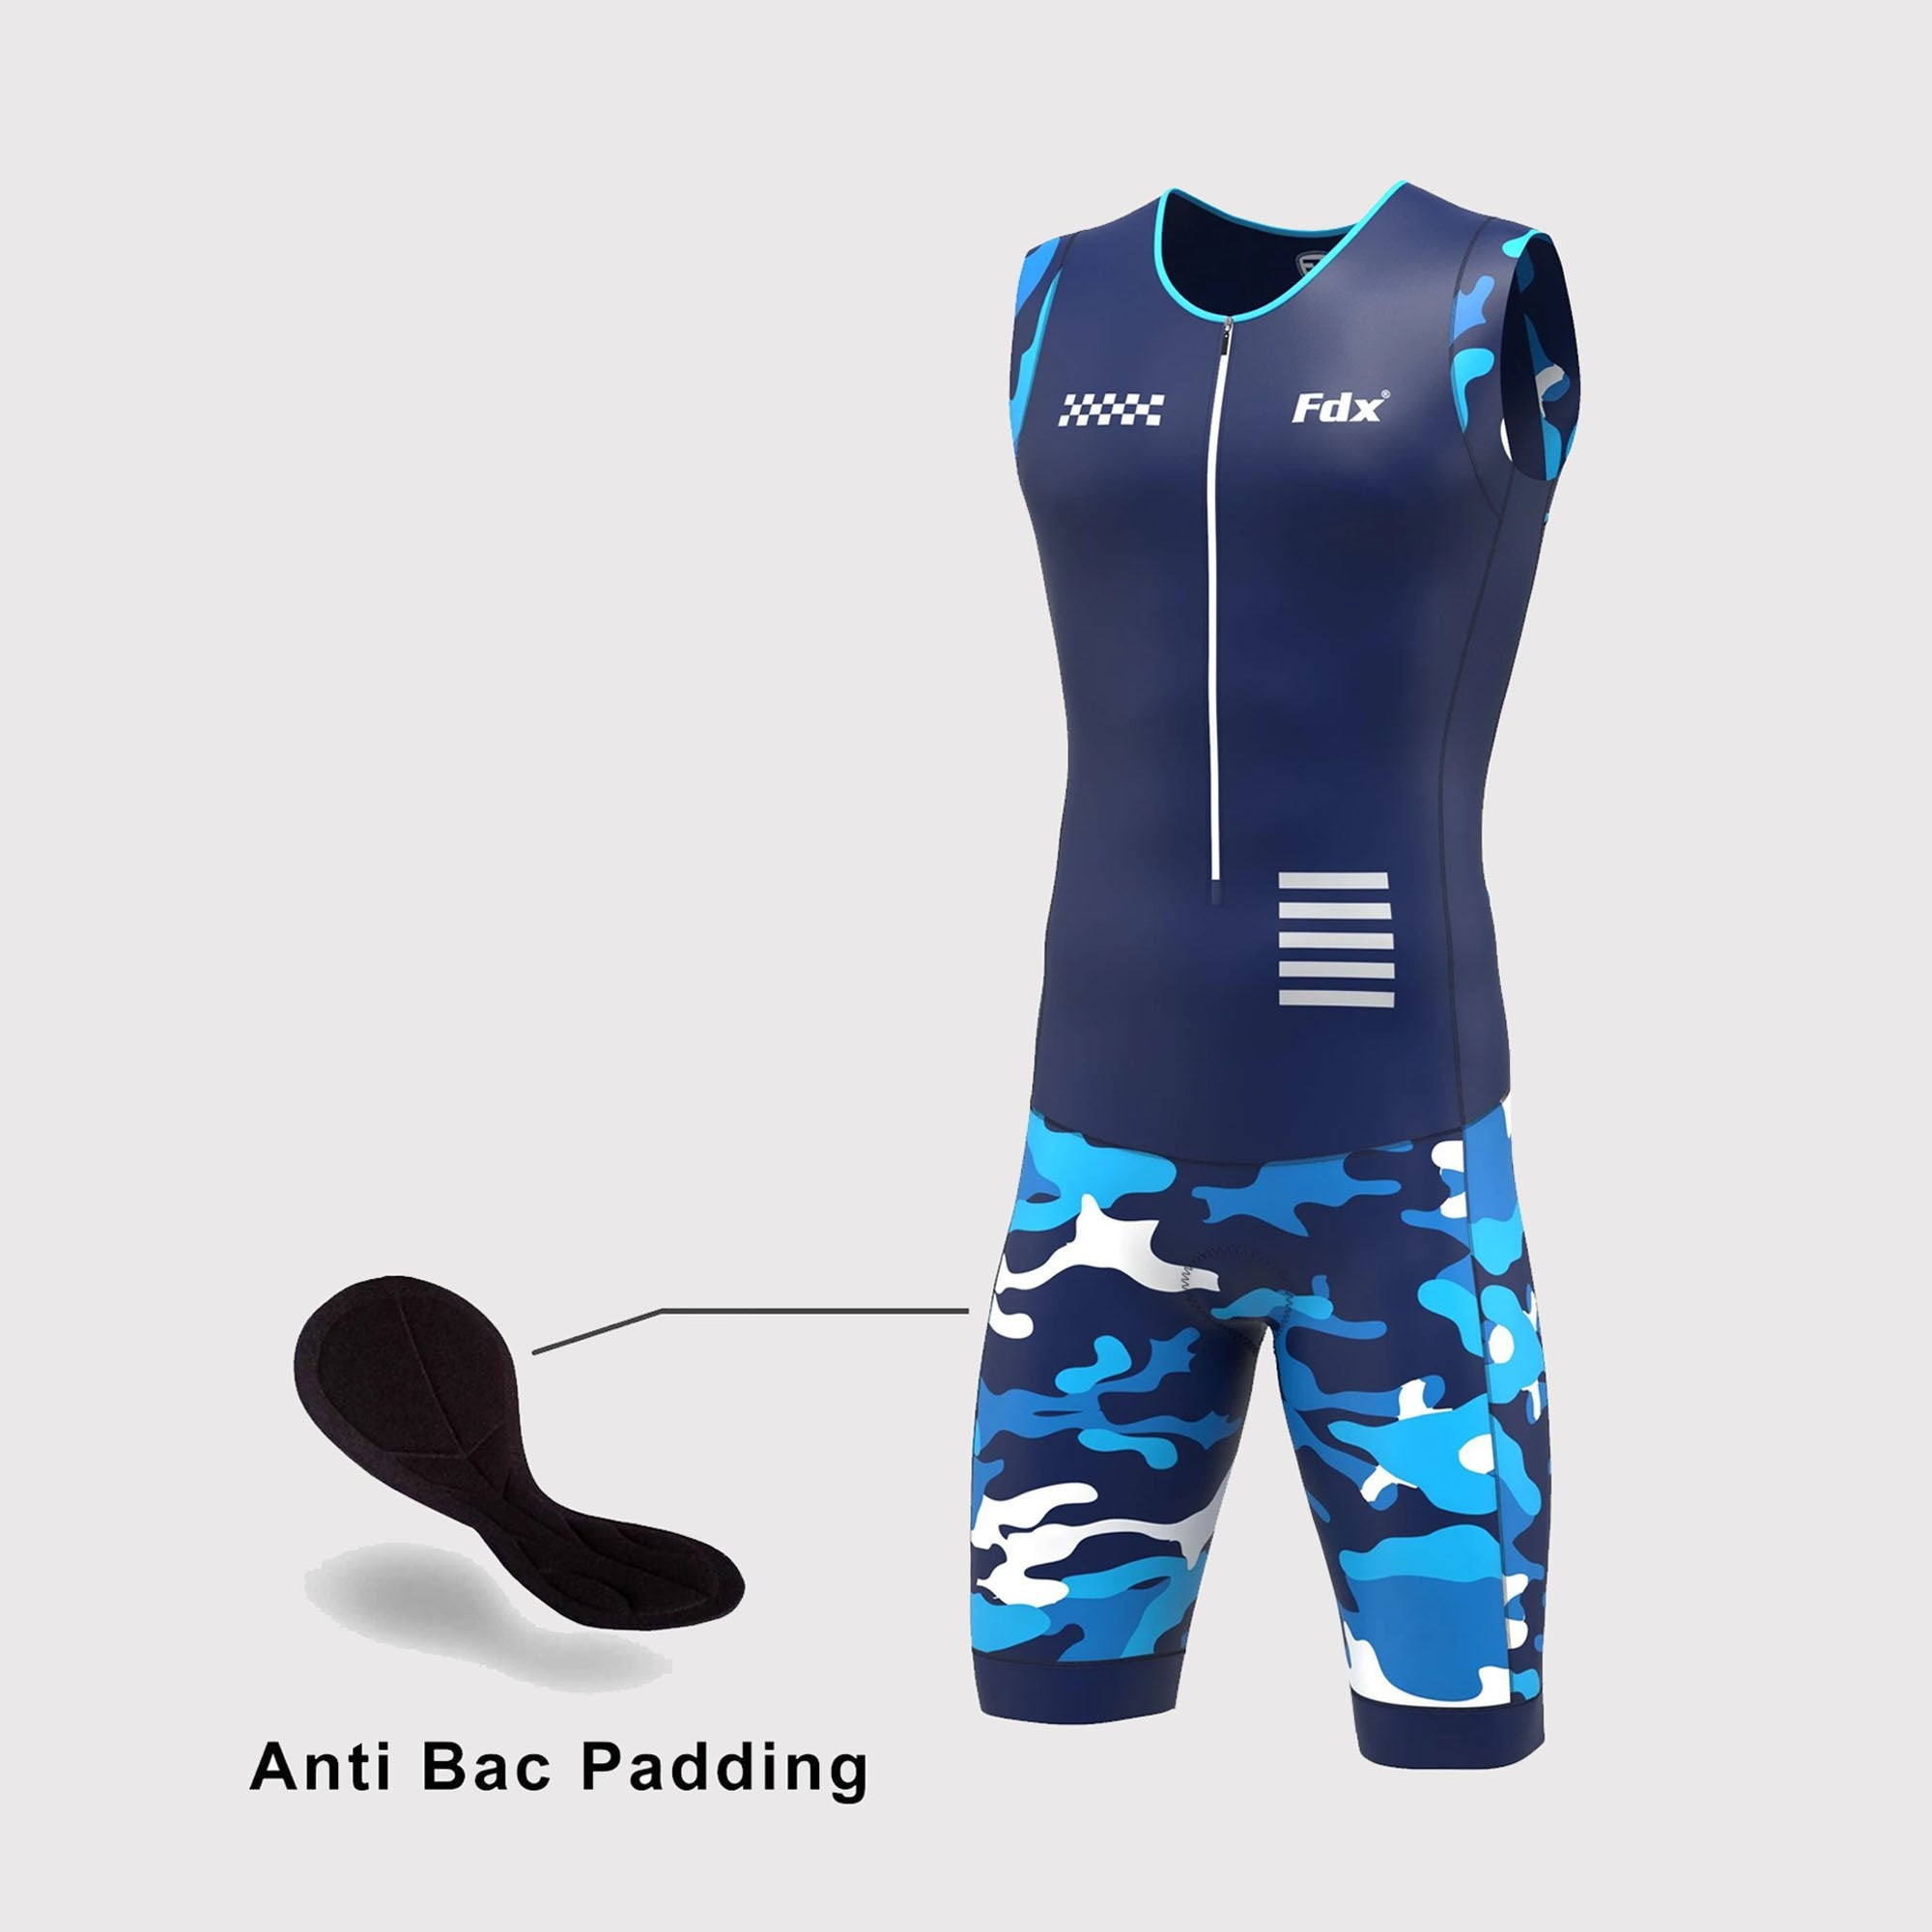 Fdx Camouflage Blue Men's Padded Triathlon Suit